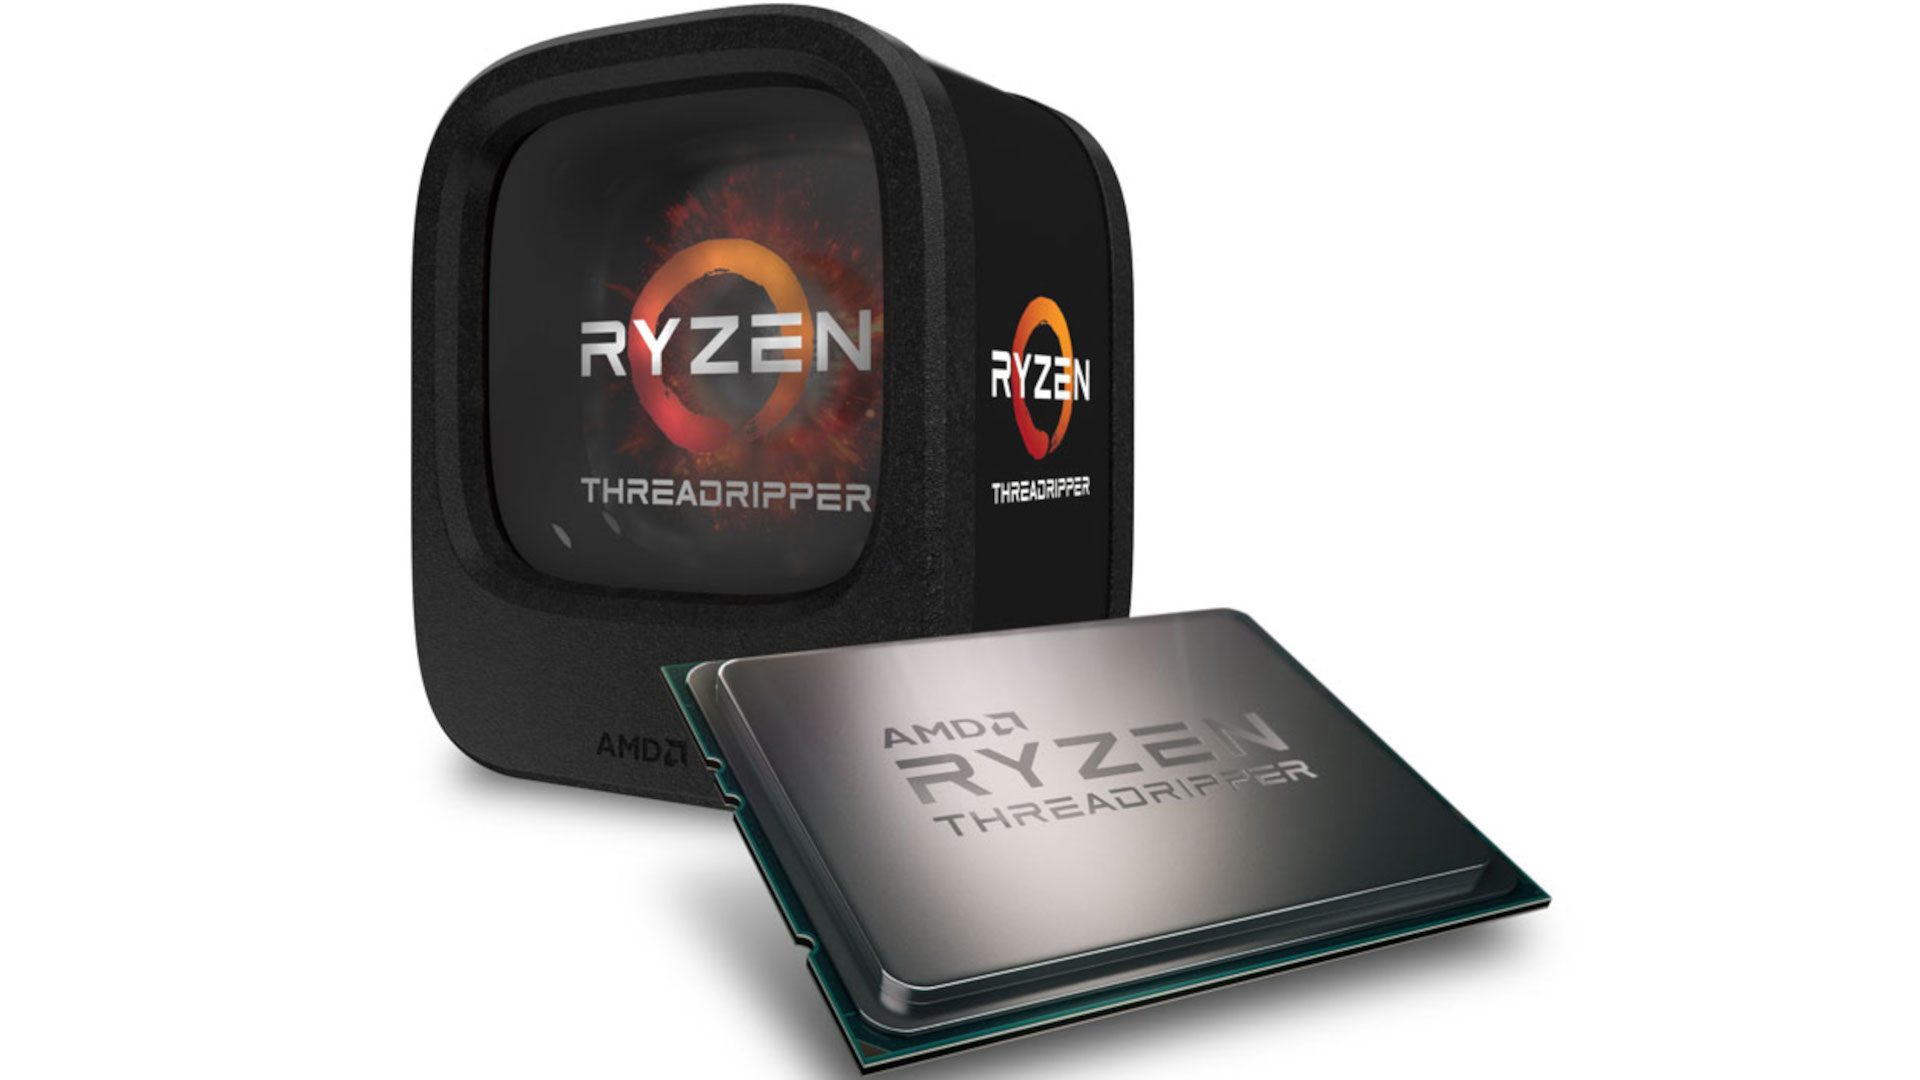 AMD Ryzen TR 1900X 2